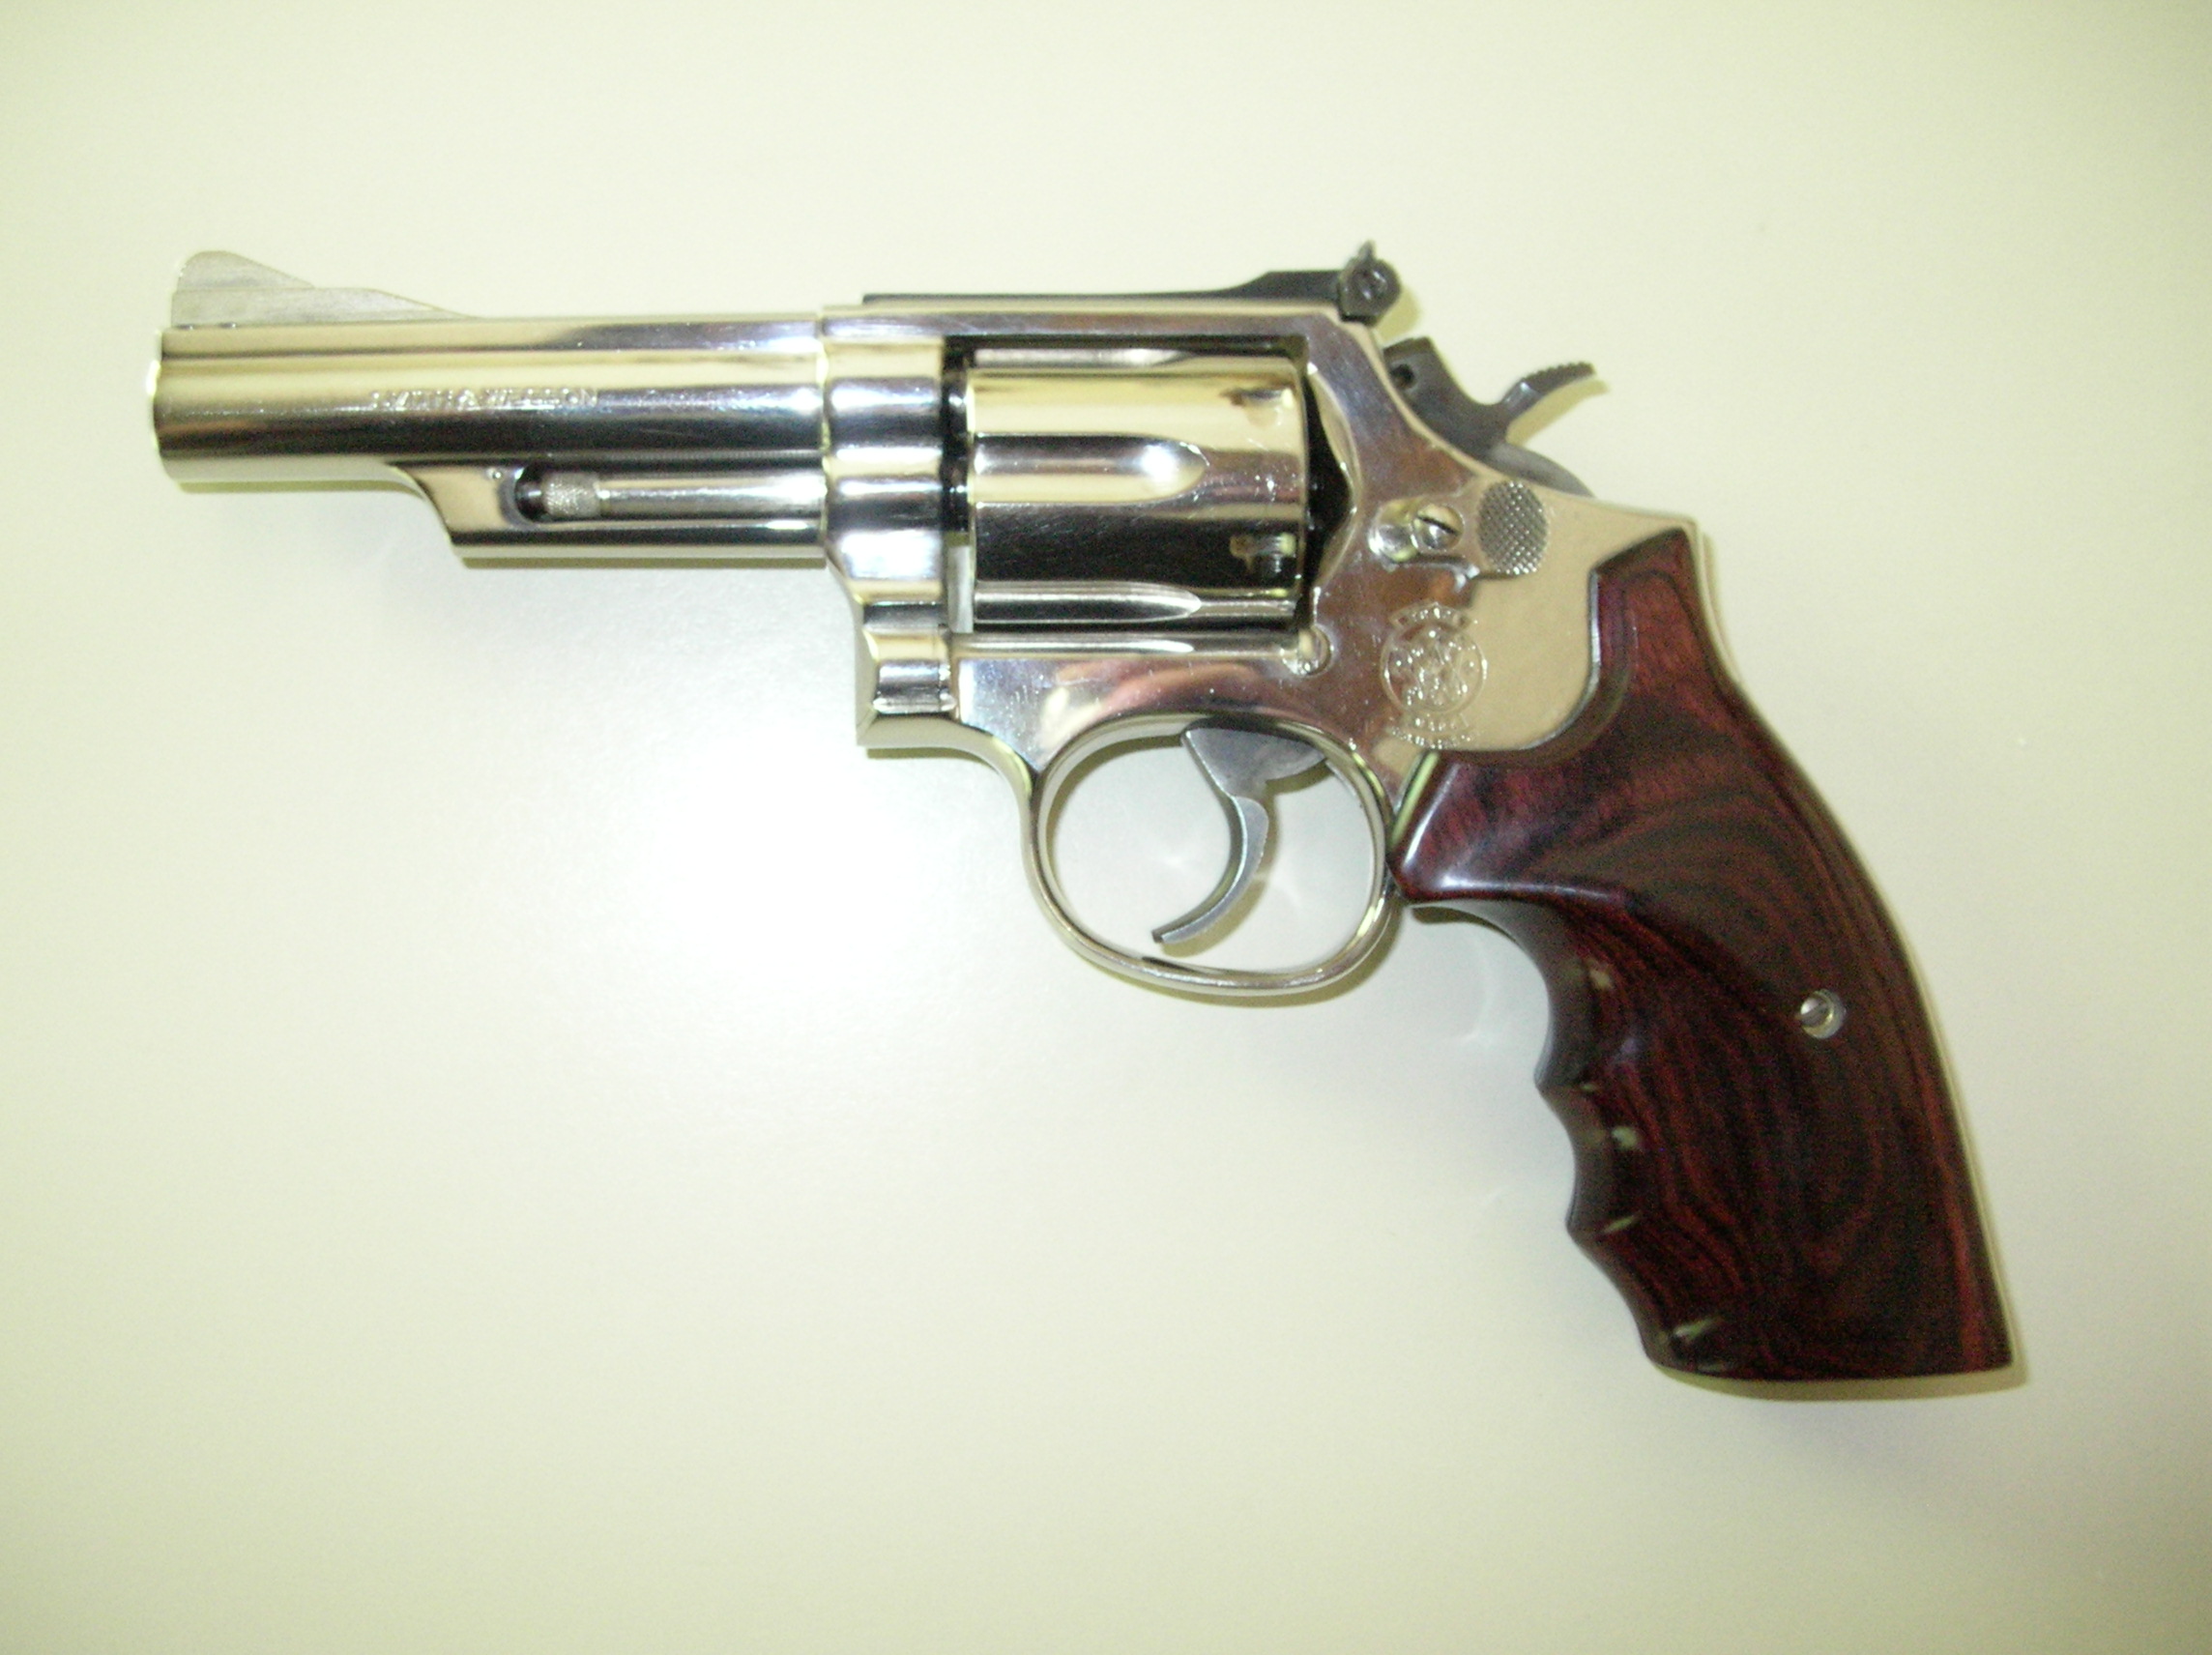 File:S&W Model 19-5 .357 Magnum.JPG - Wikimedia Commons